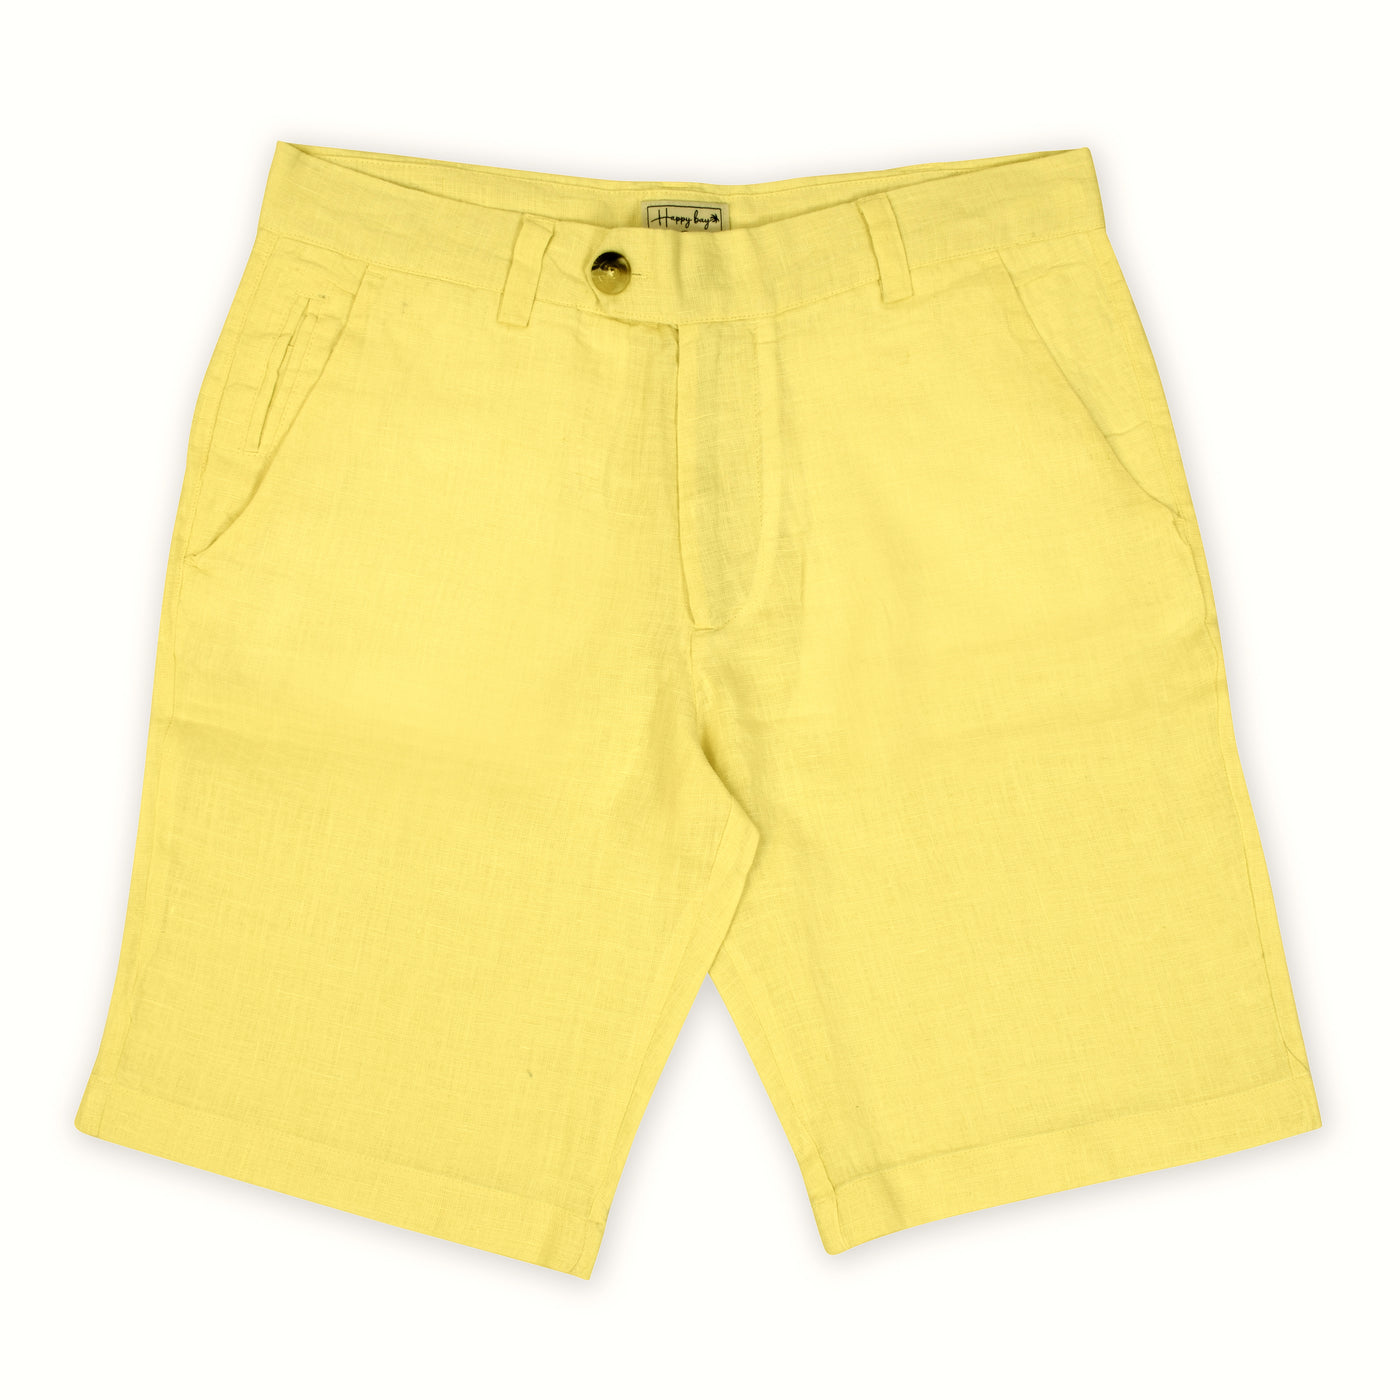 Buy now pure linen blonde ambition linen shorts